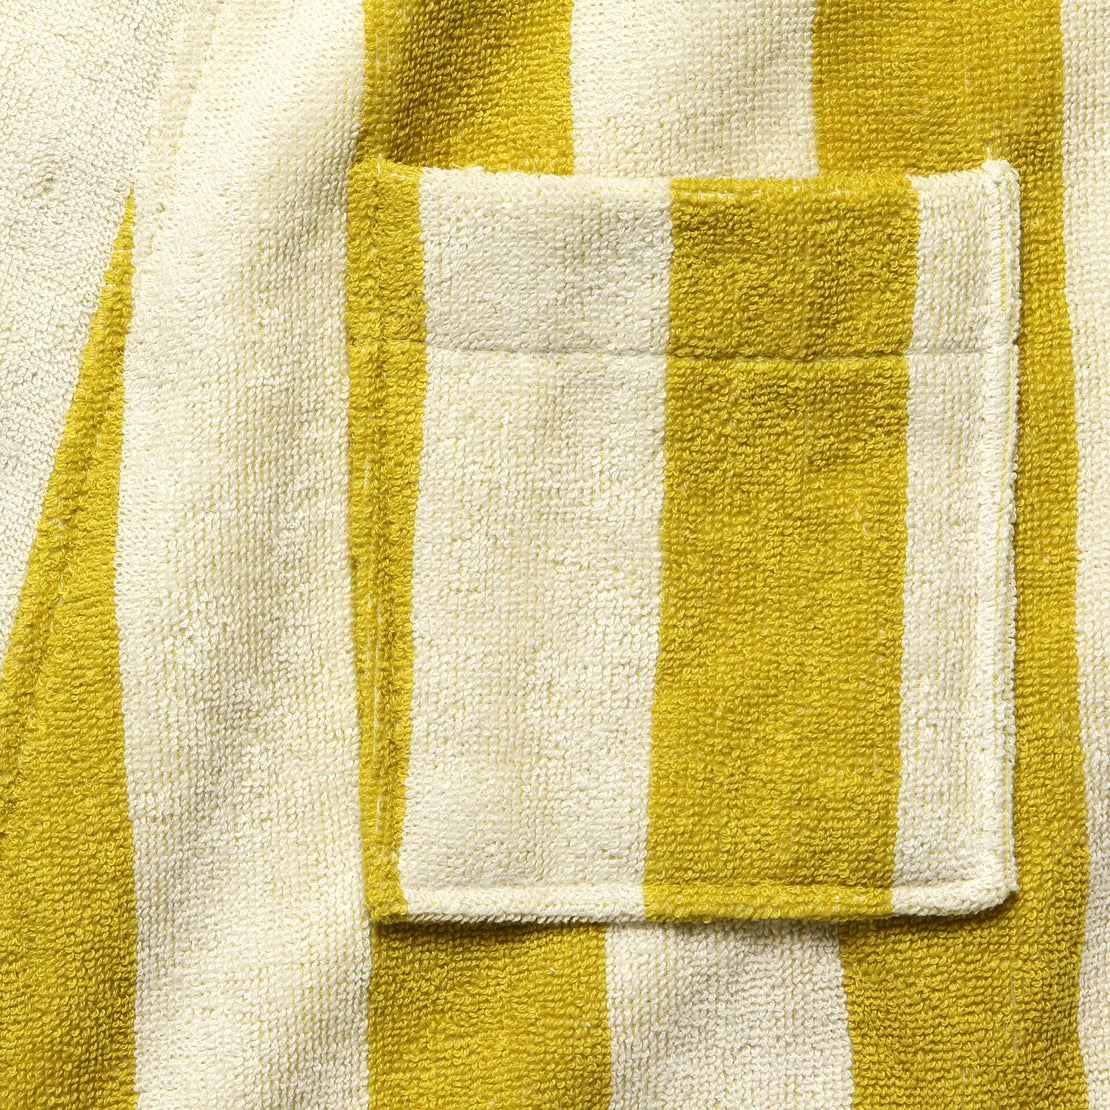 Mustard Terry Robe - Yellow/Cream Stripe - OAS - STAG Provisions - Tops - Robe